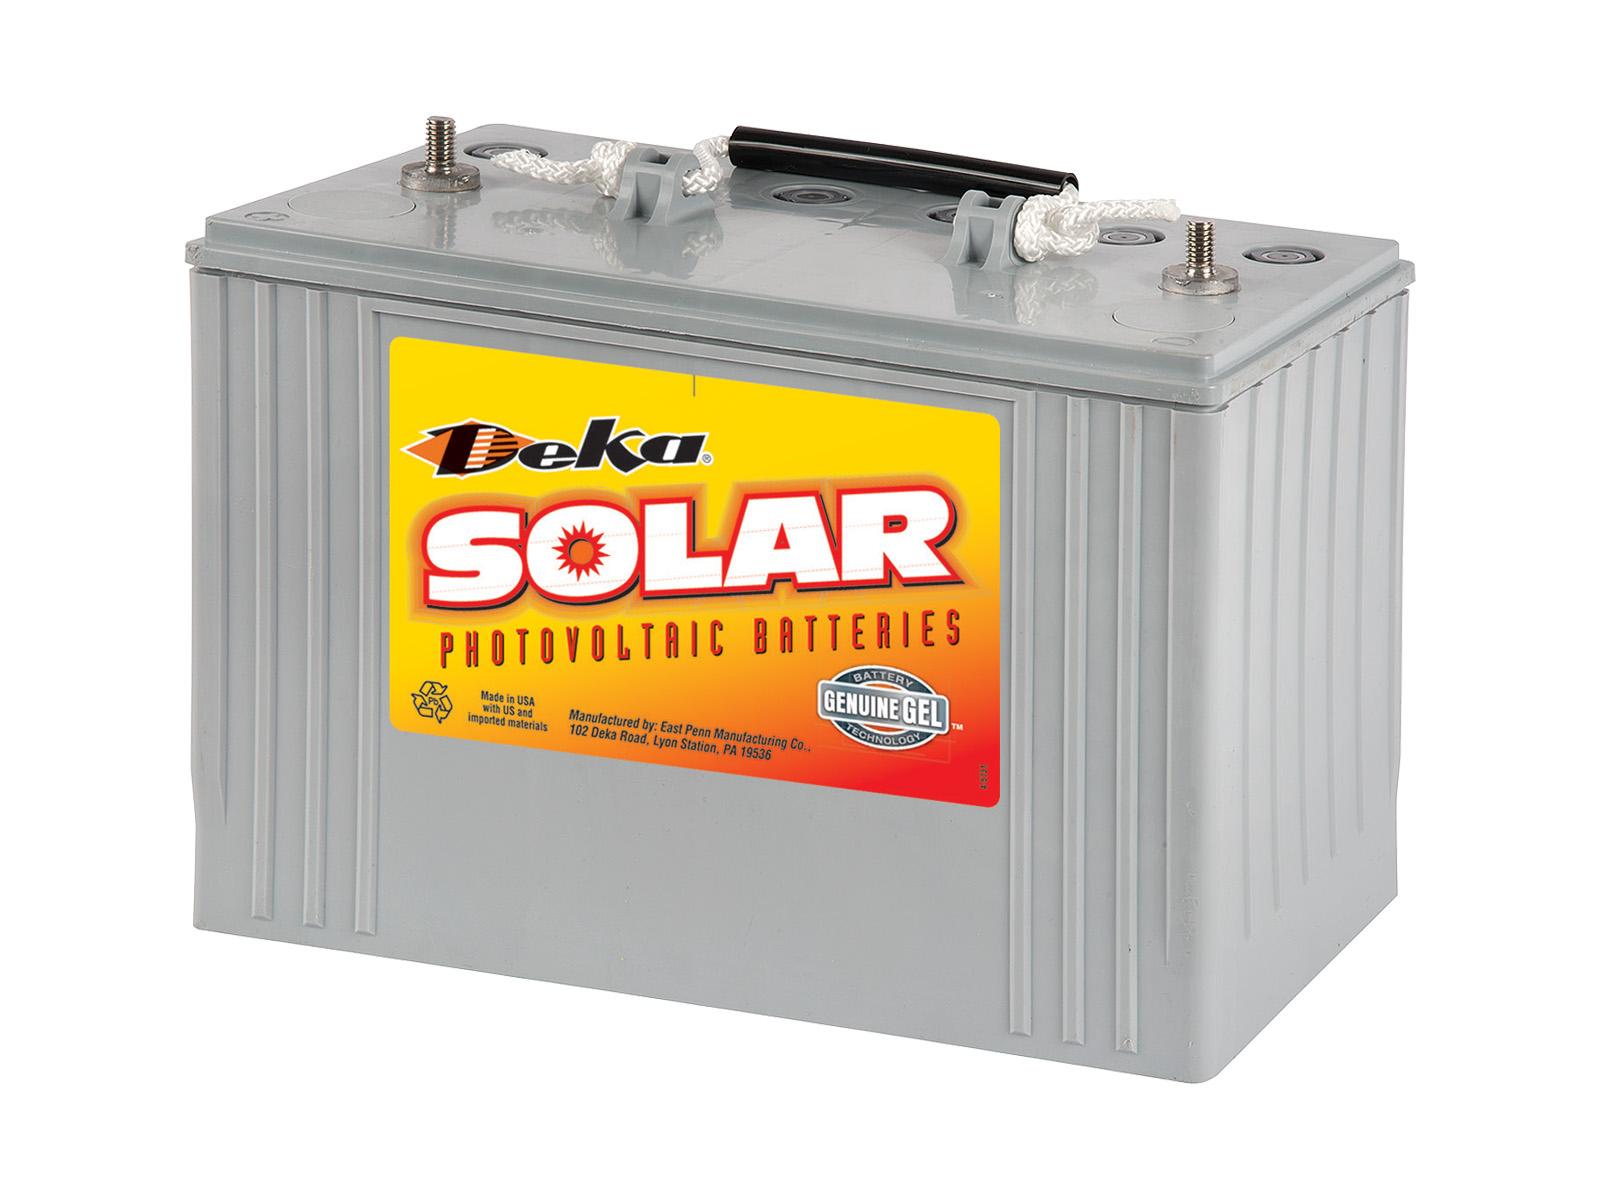 Battery, 12V, 108Ah at GEL, MK 8G31-DEKA Deep Cycle Solar